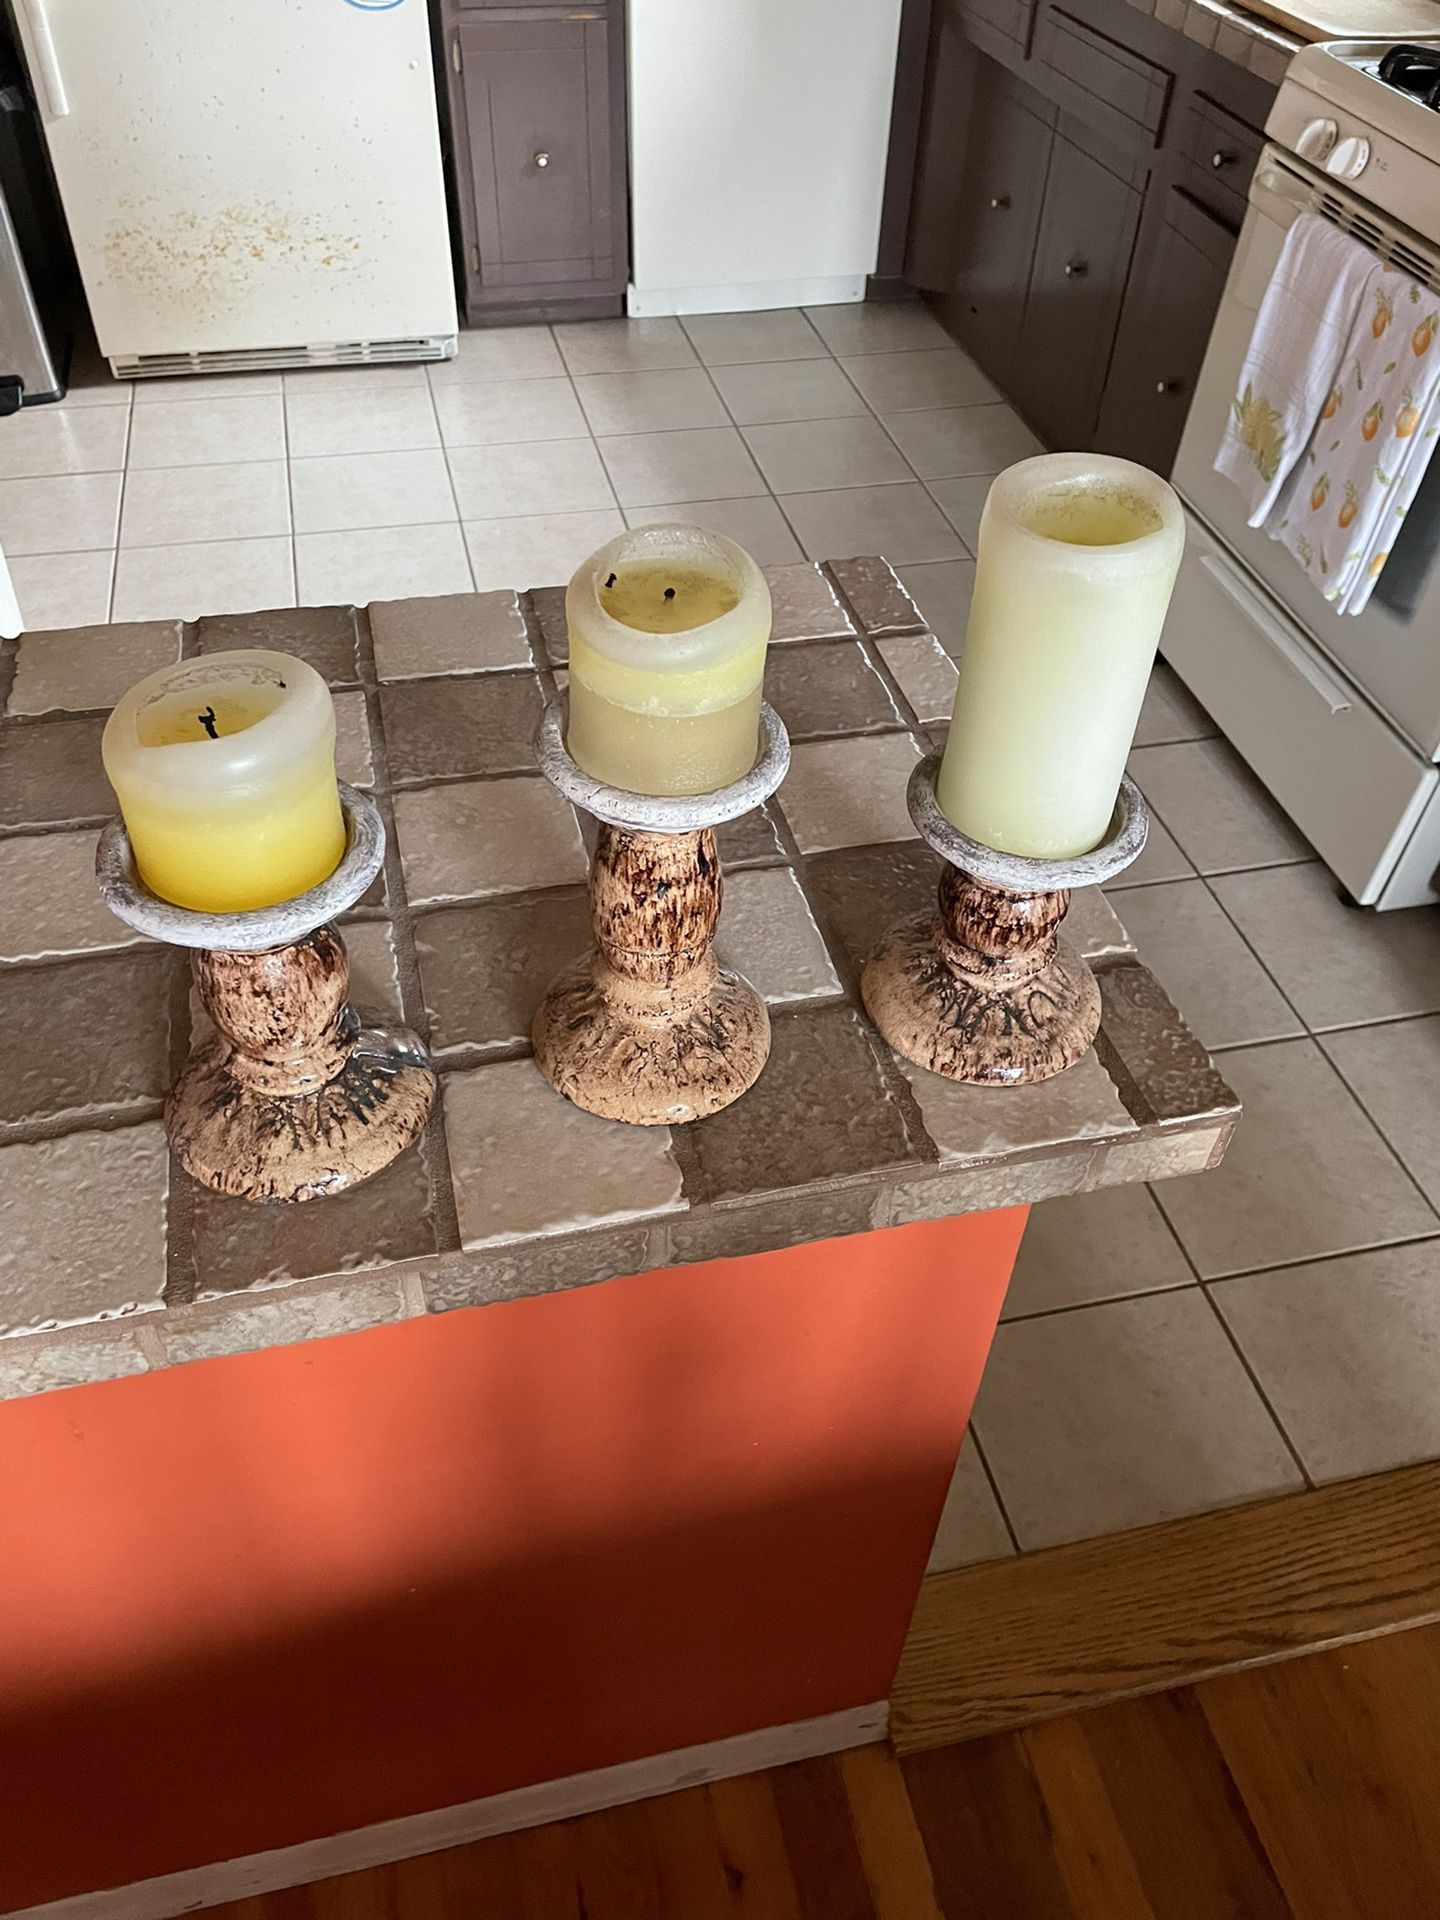 Ceramic Pillar Candle Holders